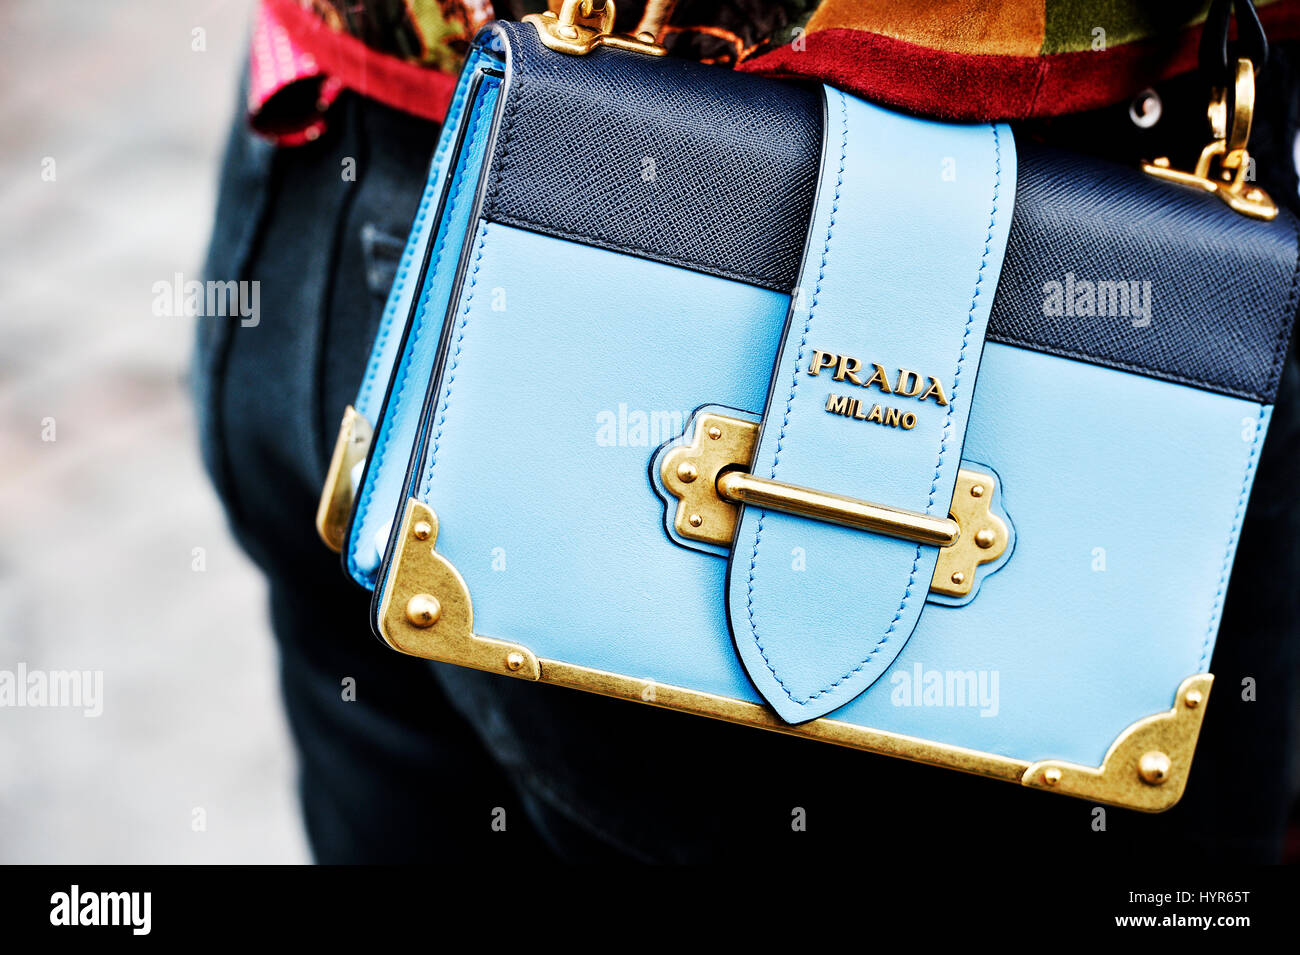 Prada Milano Bag High Resolution Stock Photography and Images - Alamy